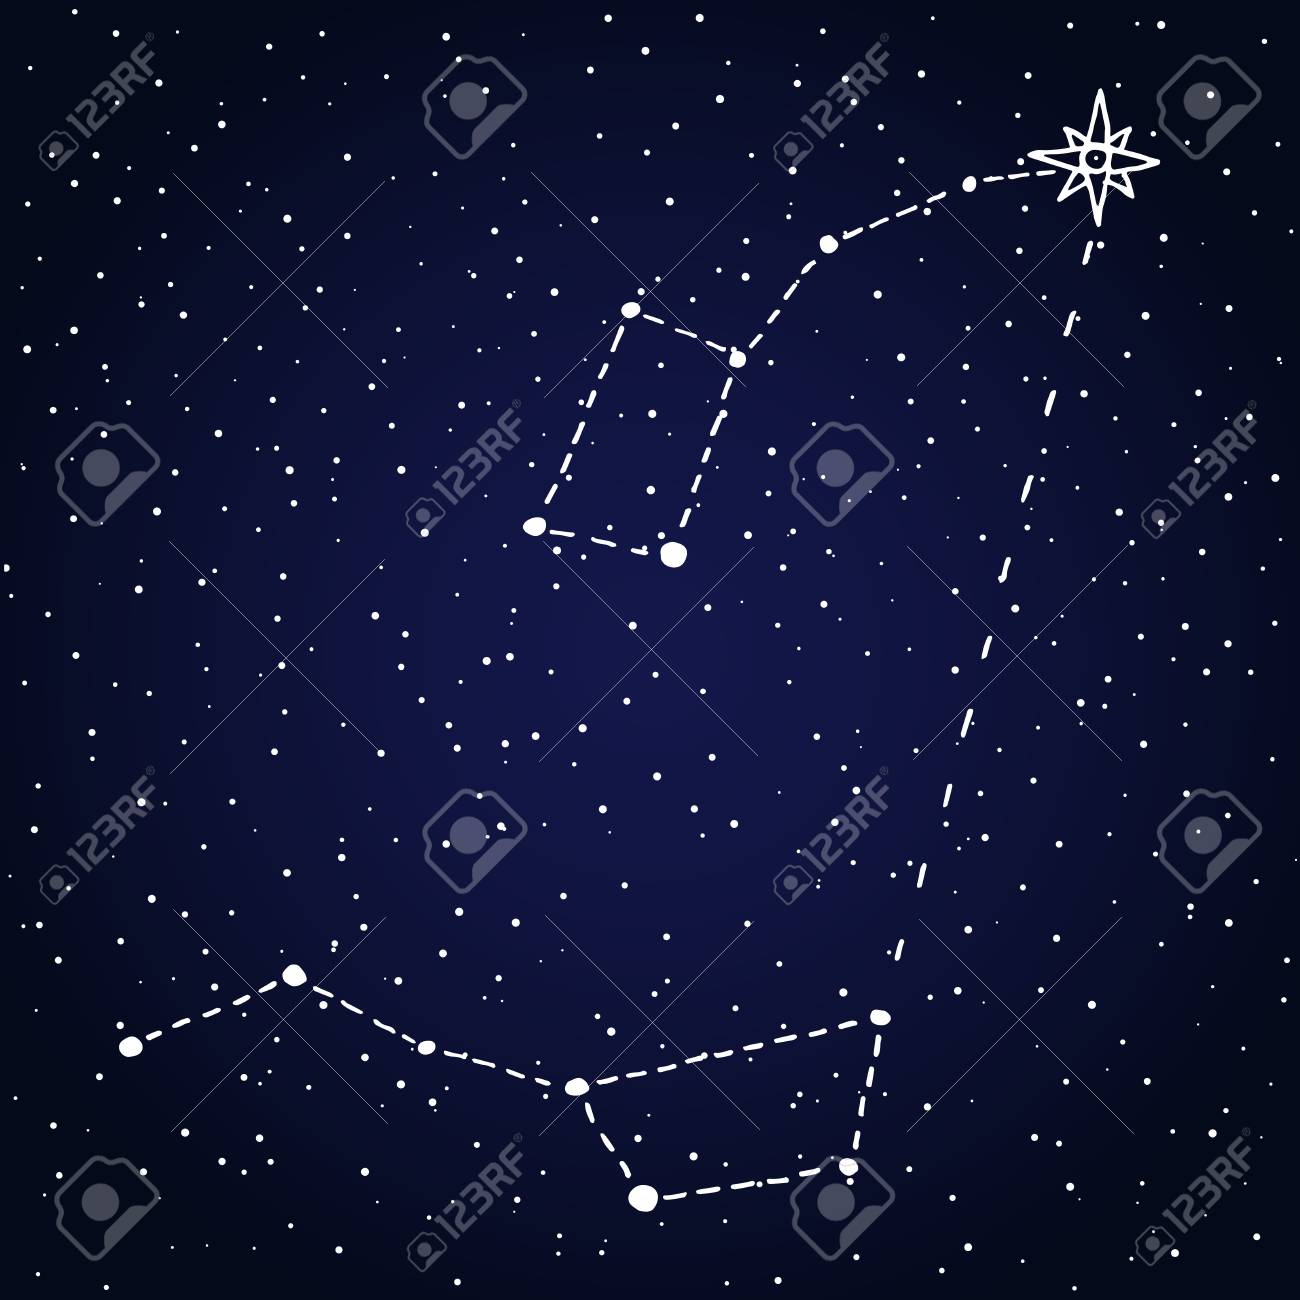 112025917-finding-north-star-polaris-starry-night-sky-with-ursa-major-and-ursa-minor-constellations-little-dip.jpg